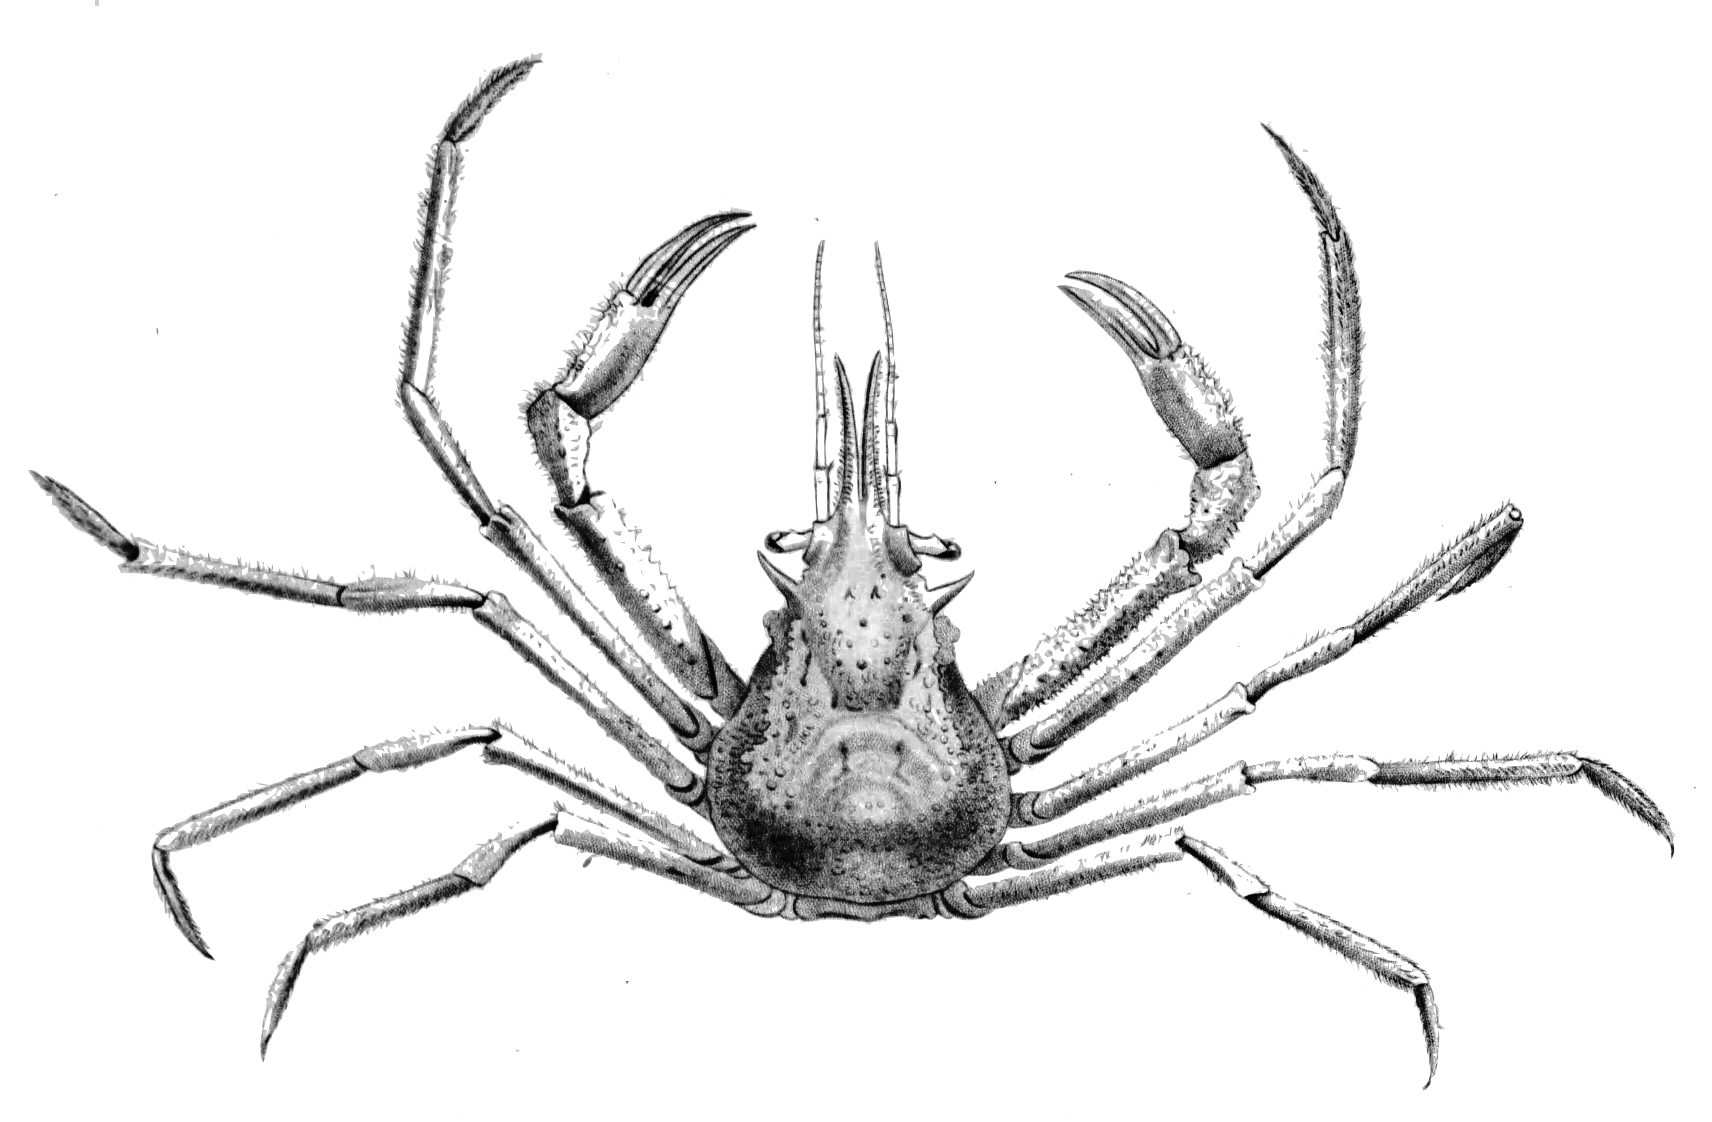 File:Oregonia gracilis Dana, 1851 (Graceful decorator crab